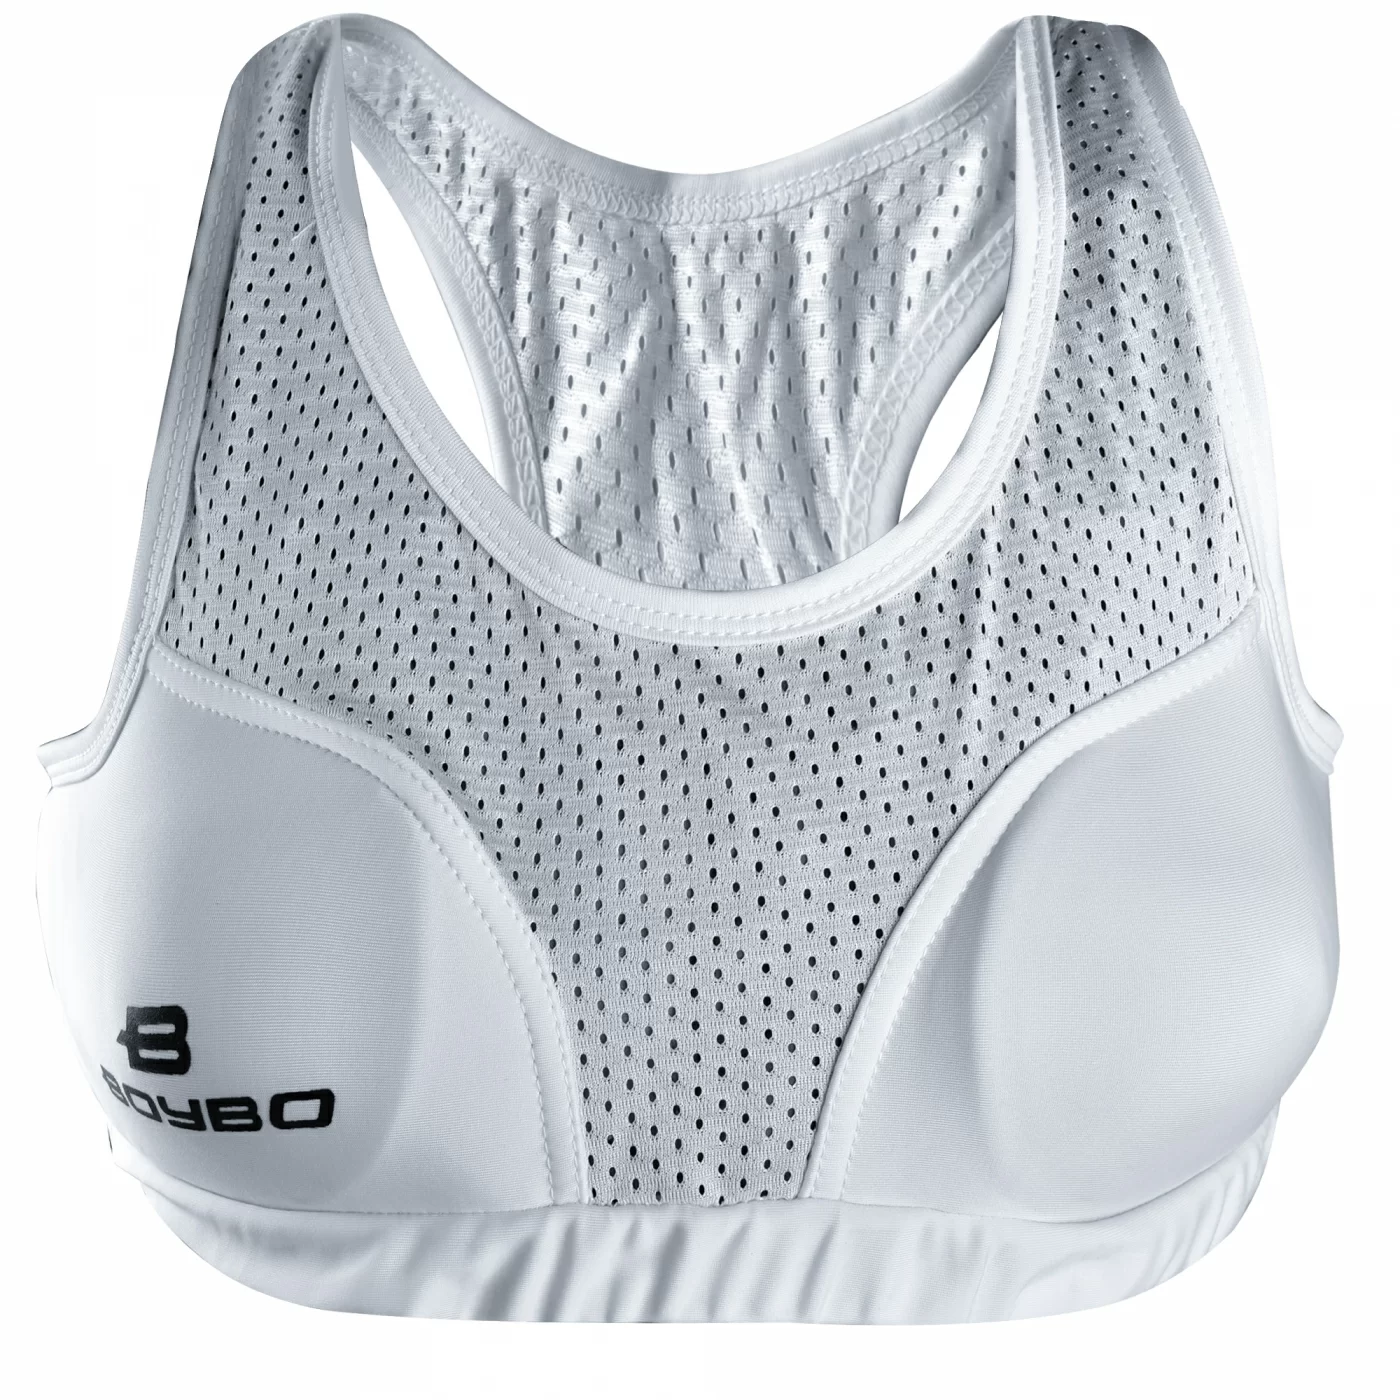 Реальное фото Защита груди BoyBo белая BP200 от магазина СпортСЕ